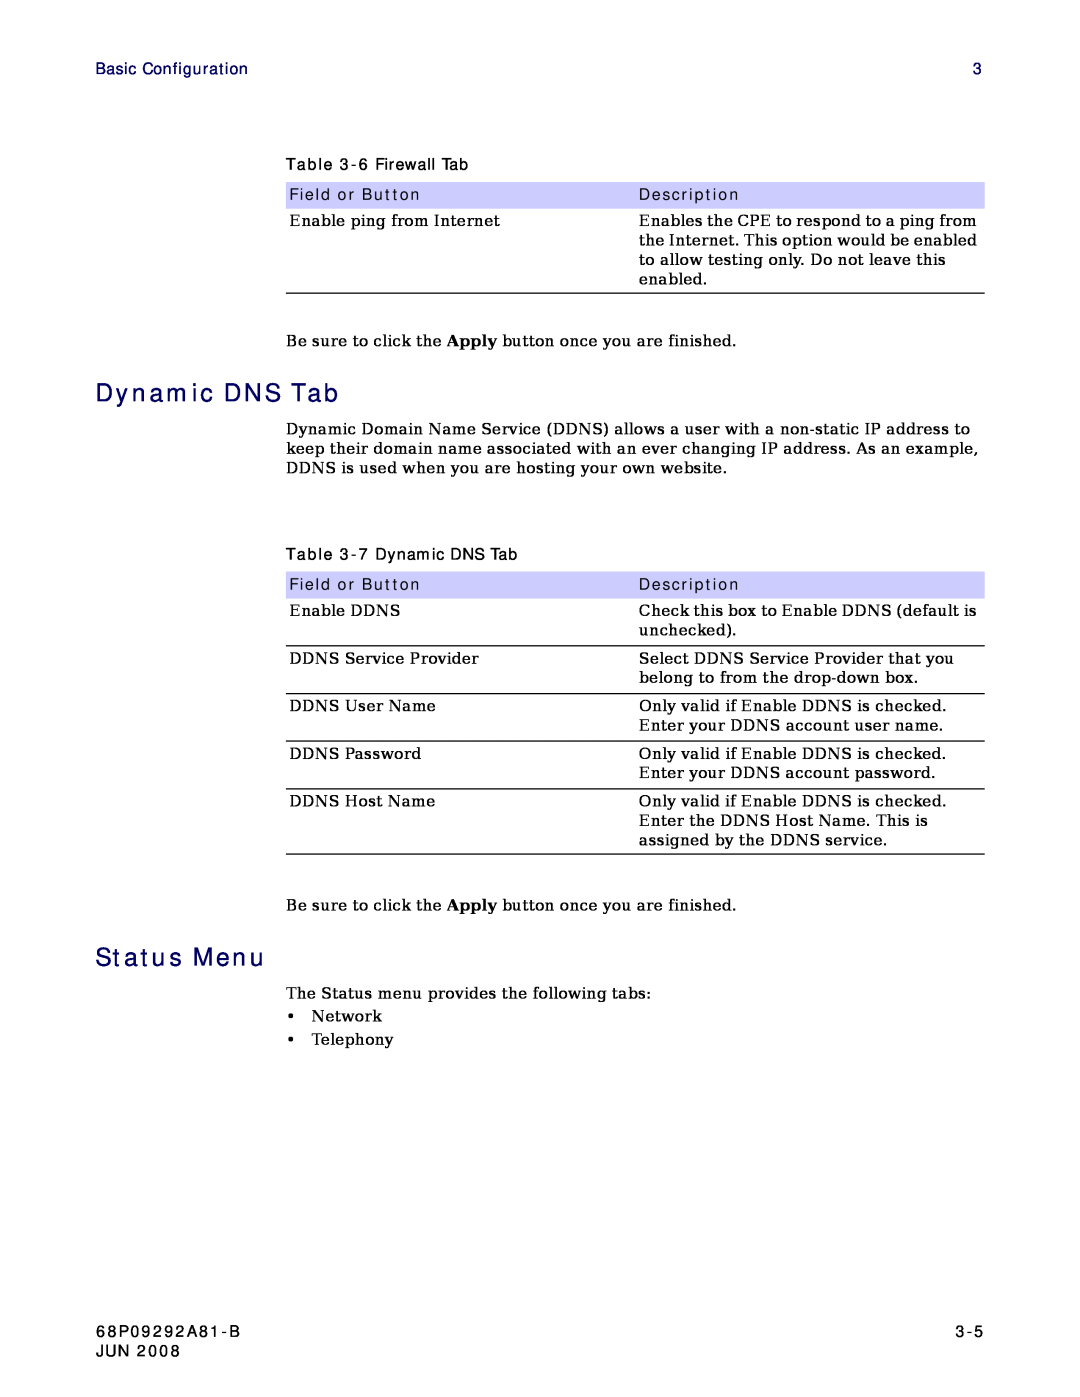 Motorola CPEI 750 manual Dynamic DNS Tab, Status Menu, Basic Configuration, Field or Button, Description, 68P09292A81-B 